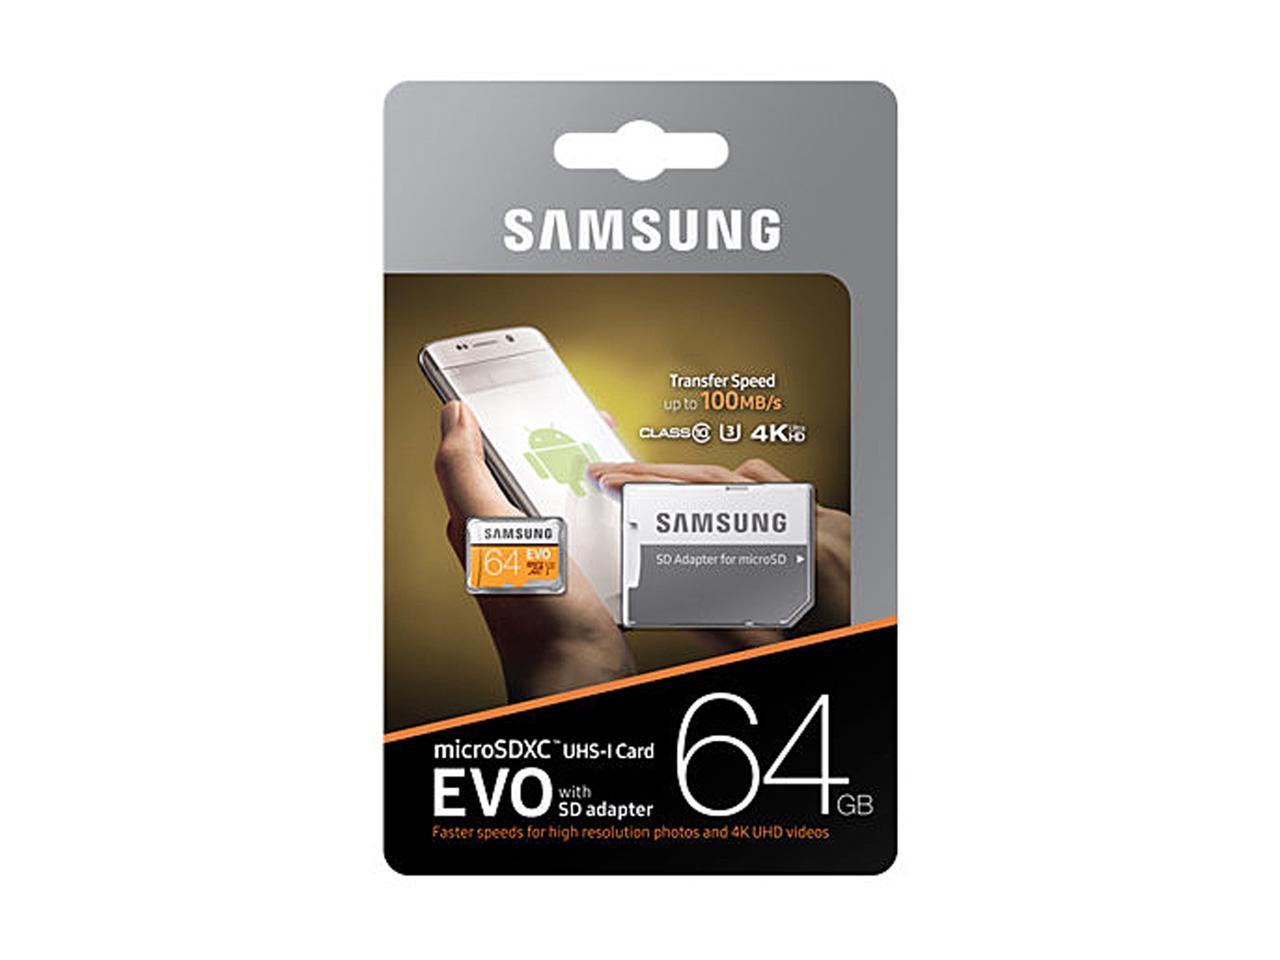 Samsung 64Gb Evo Microsdxc Memory Card W/ Adapter, Retail